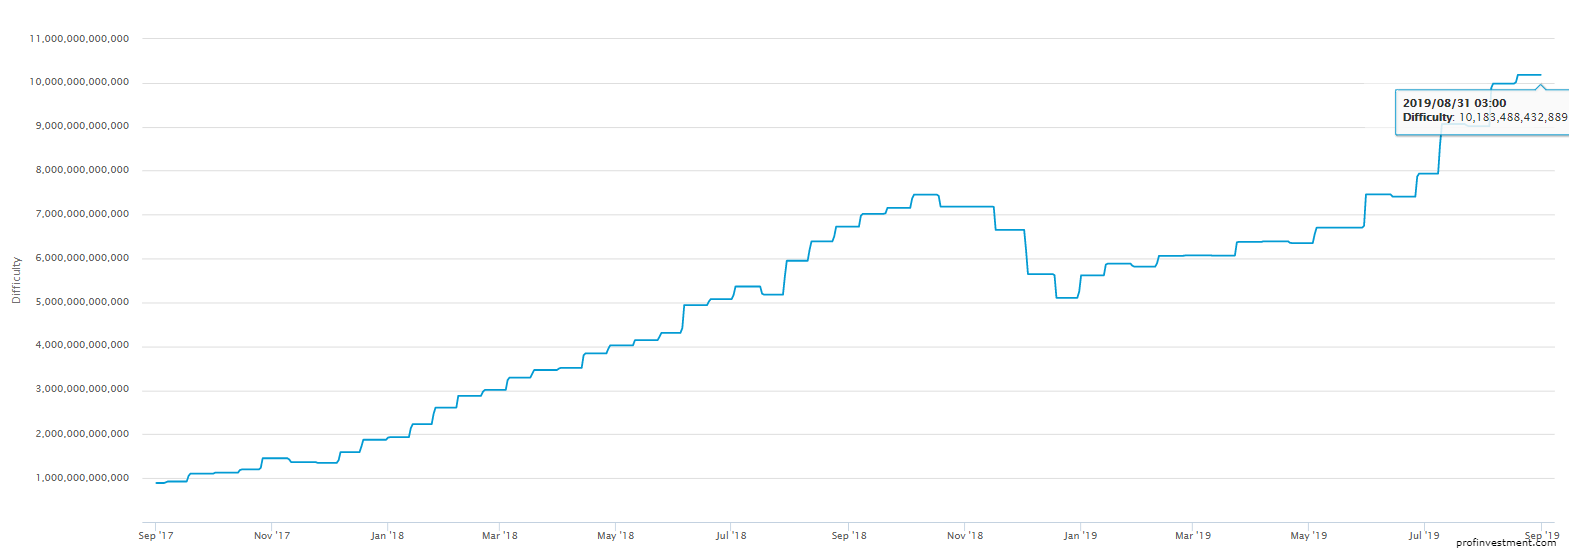 график сложности майнинга Bitcoin за 2017-2019 год